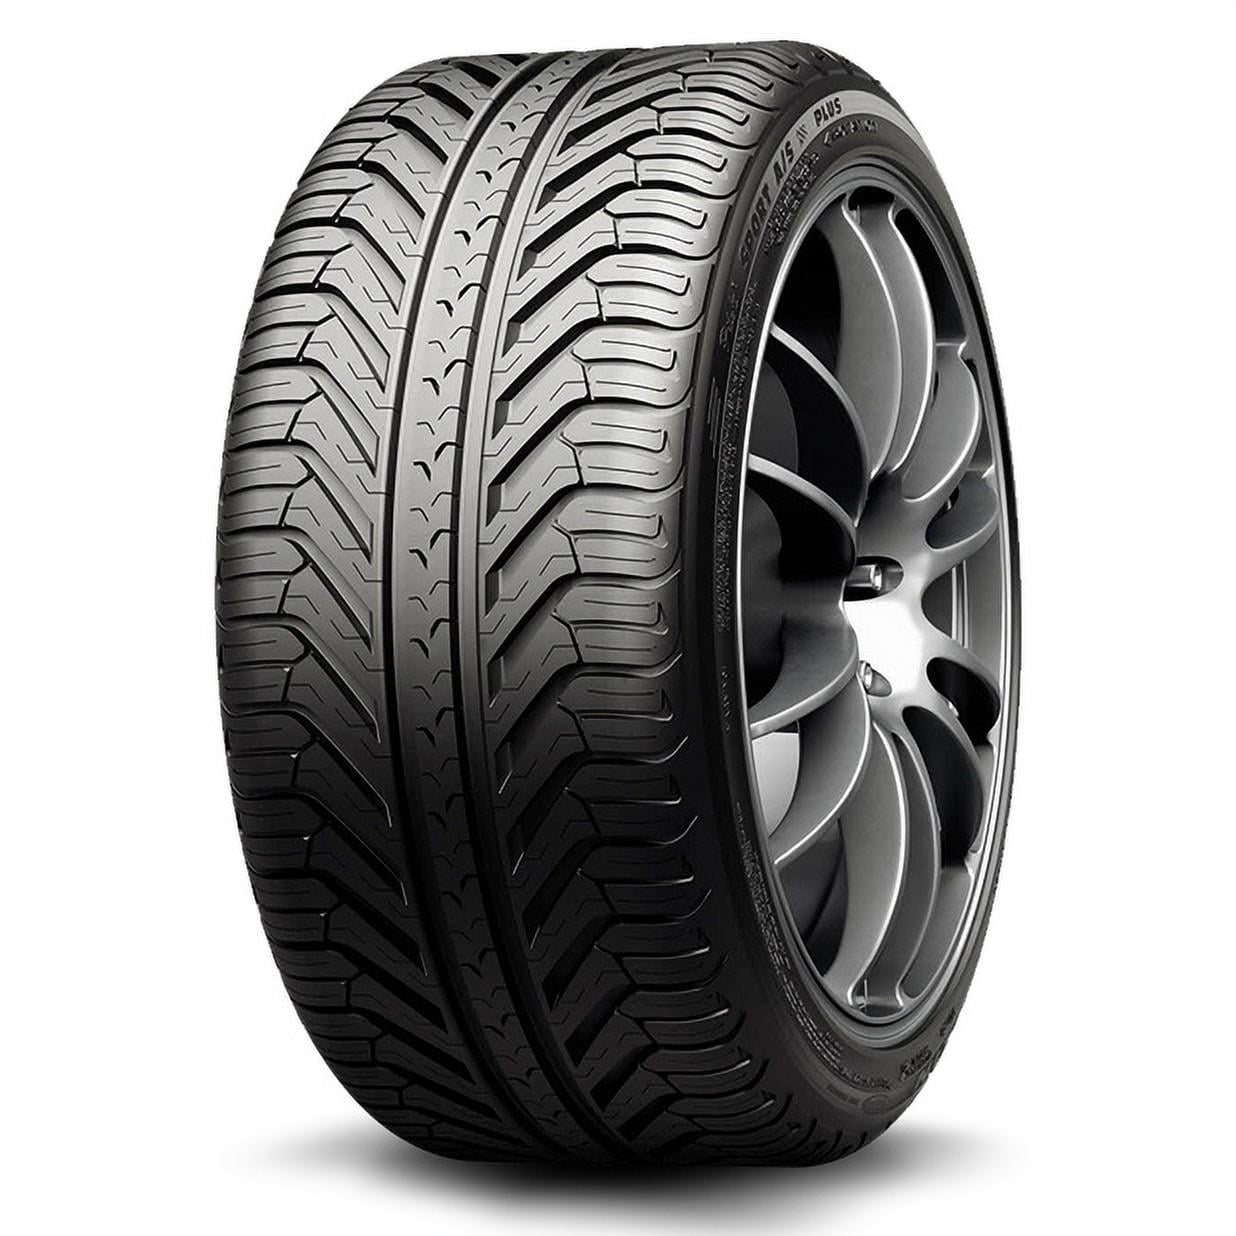 Michelin Pilot Sport A/S Plus 285/40R19 103 V Tire